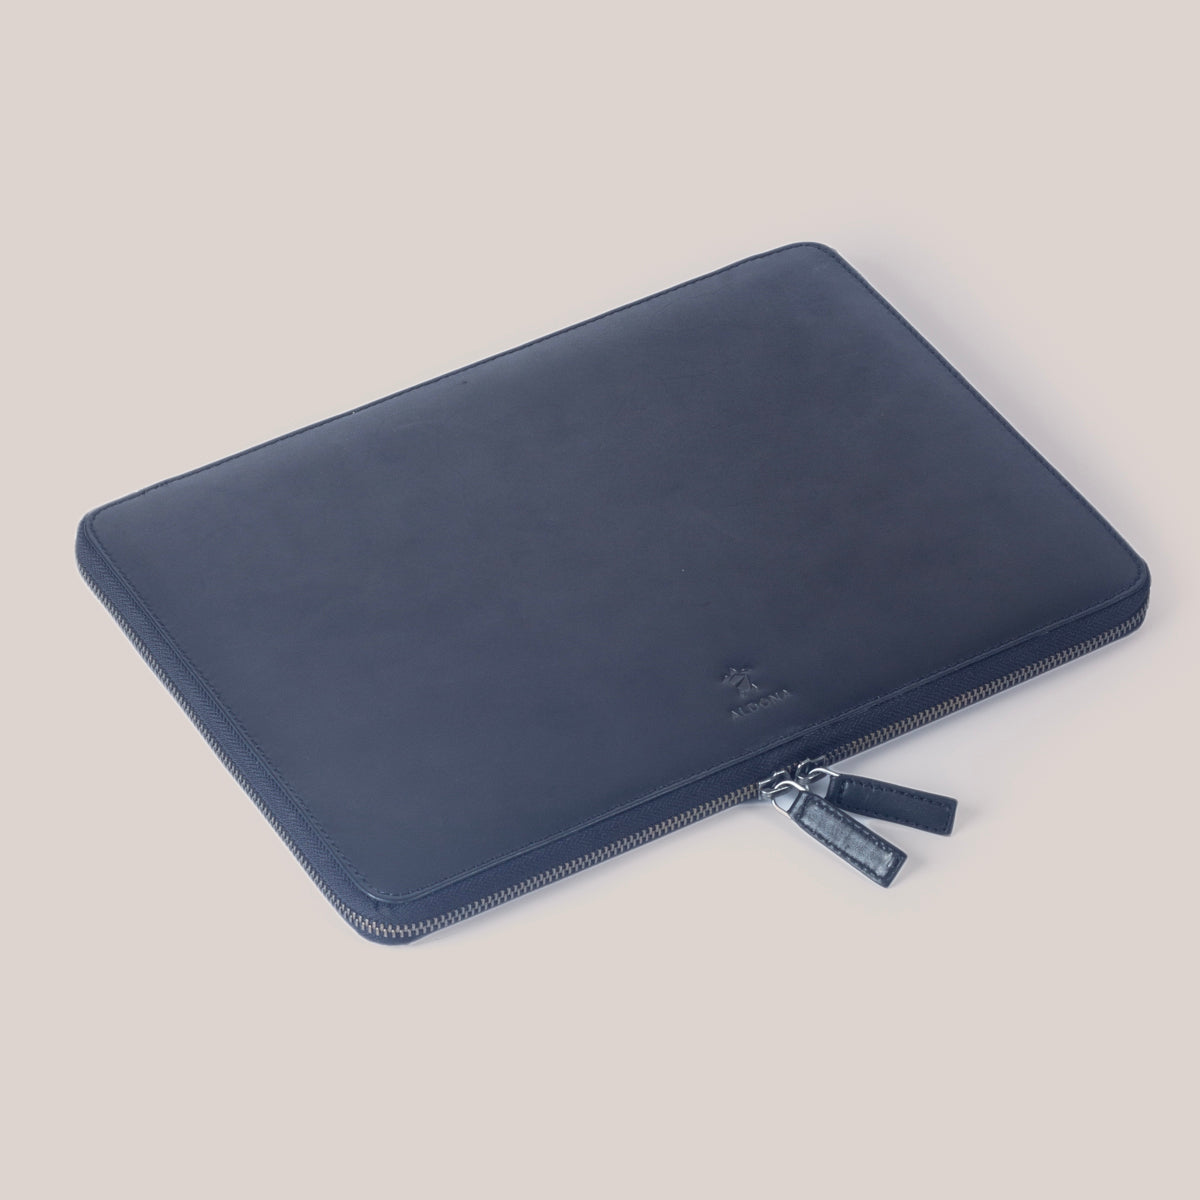 DELL XPS Zippered Laptop Case - Onyx Black